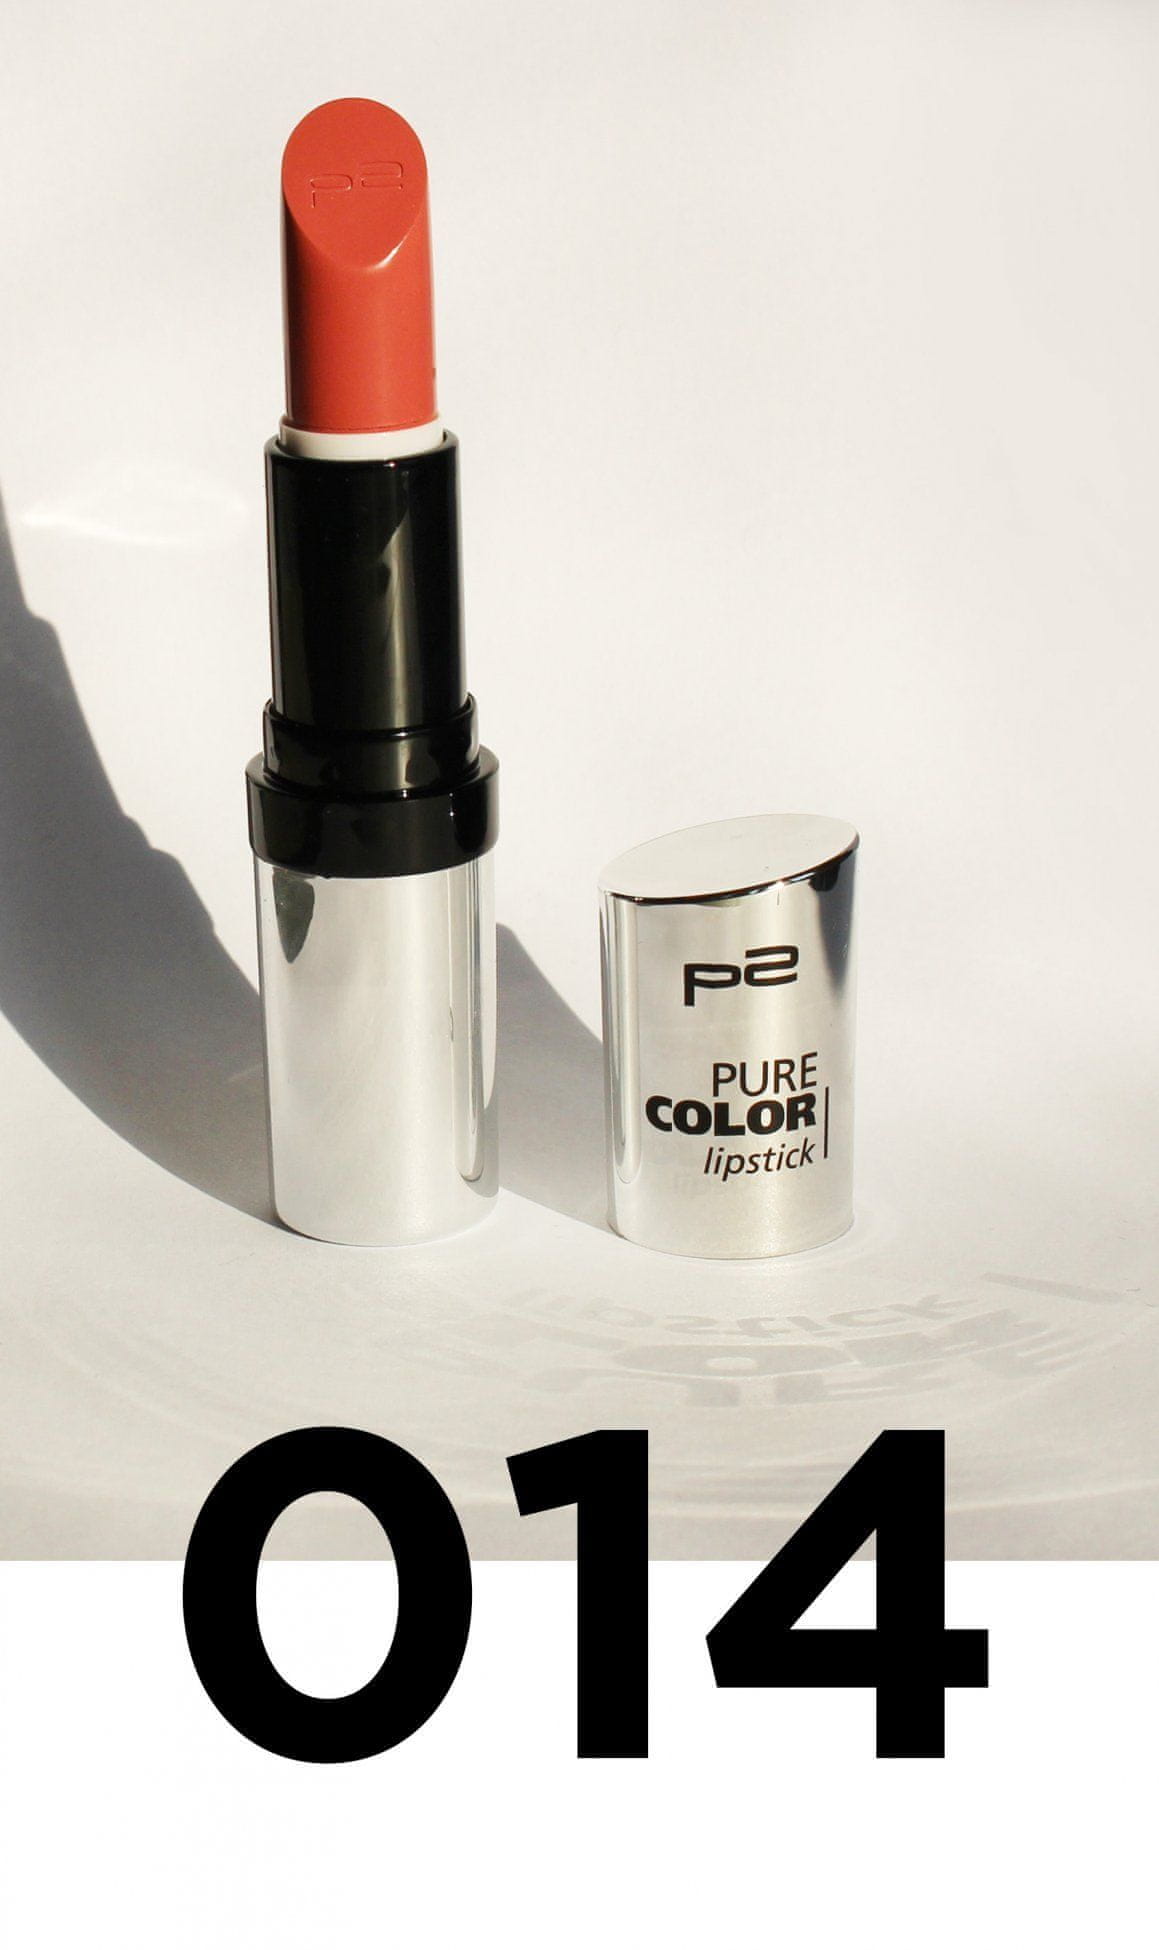 p2 cosmetics - volume gloss gel look polish